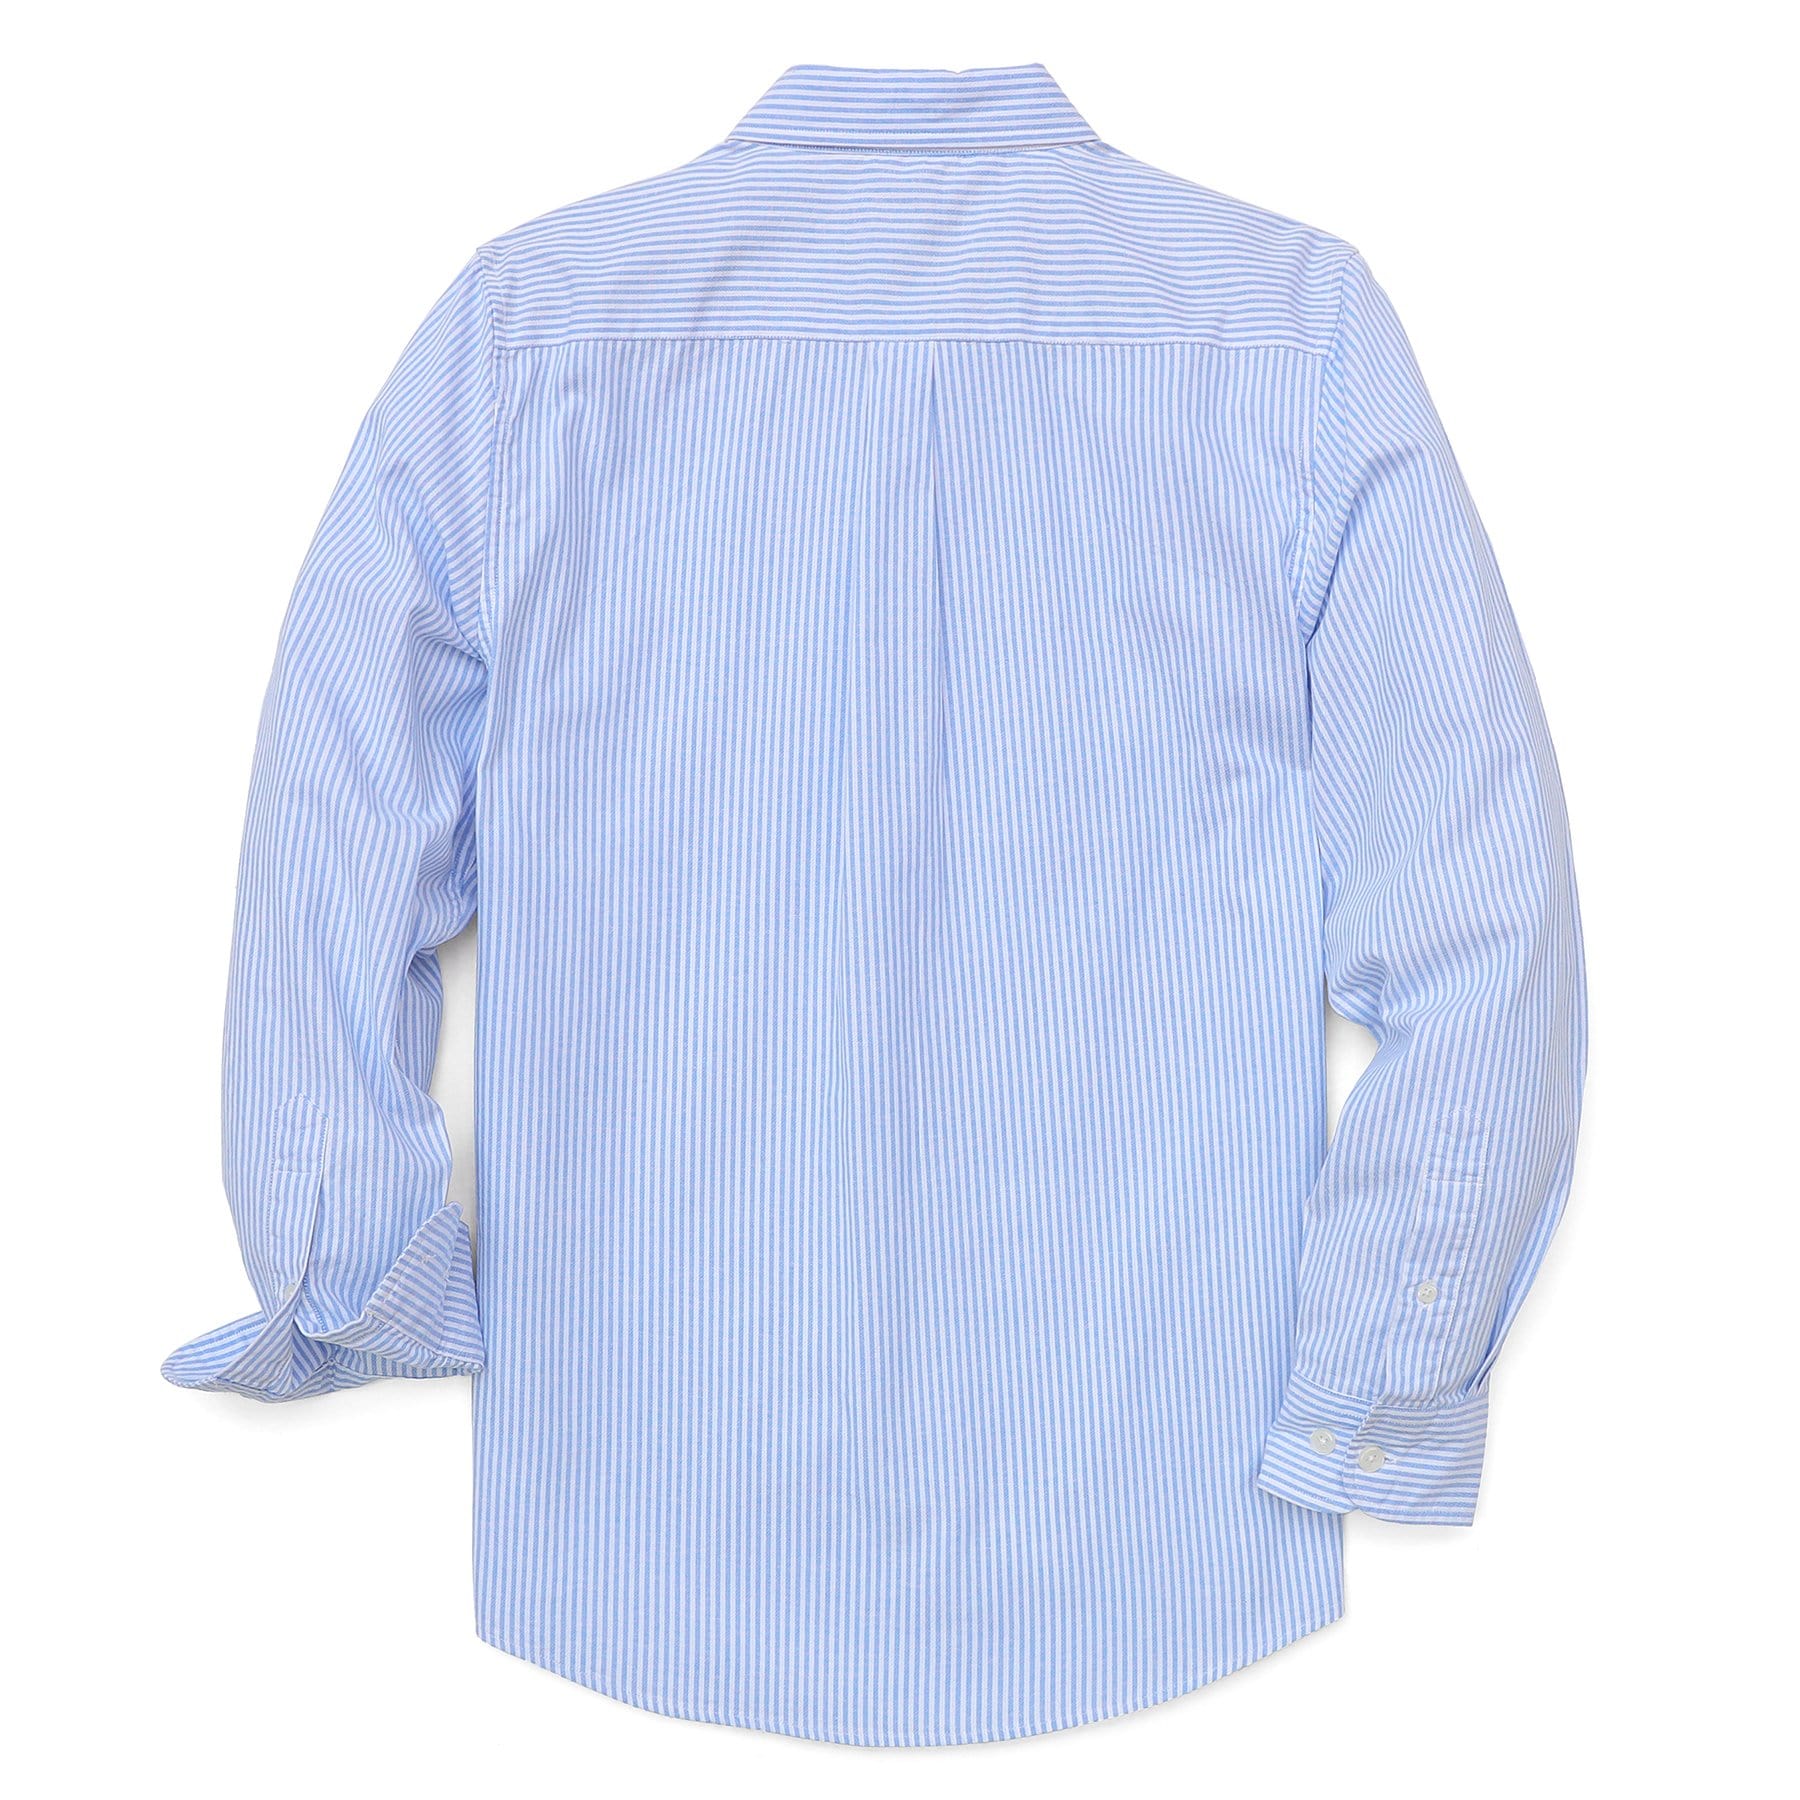 Men's casual long sleeve oxford shirt #1403